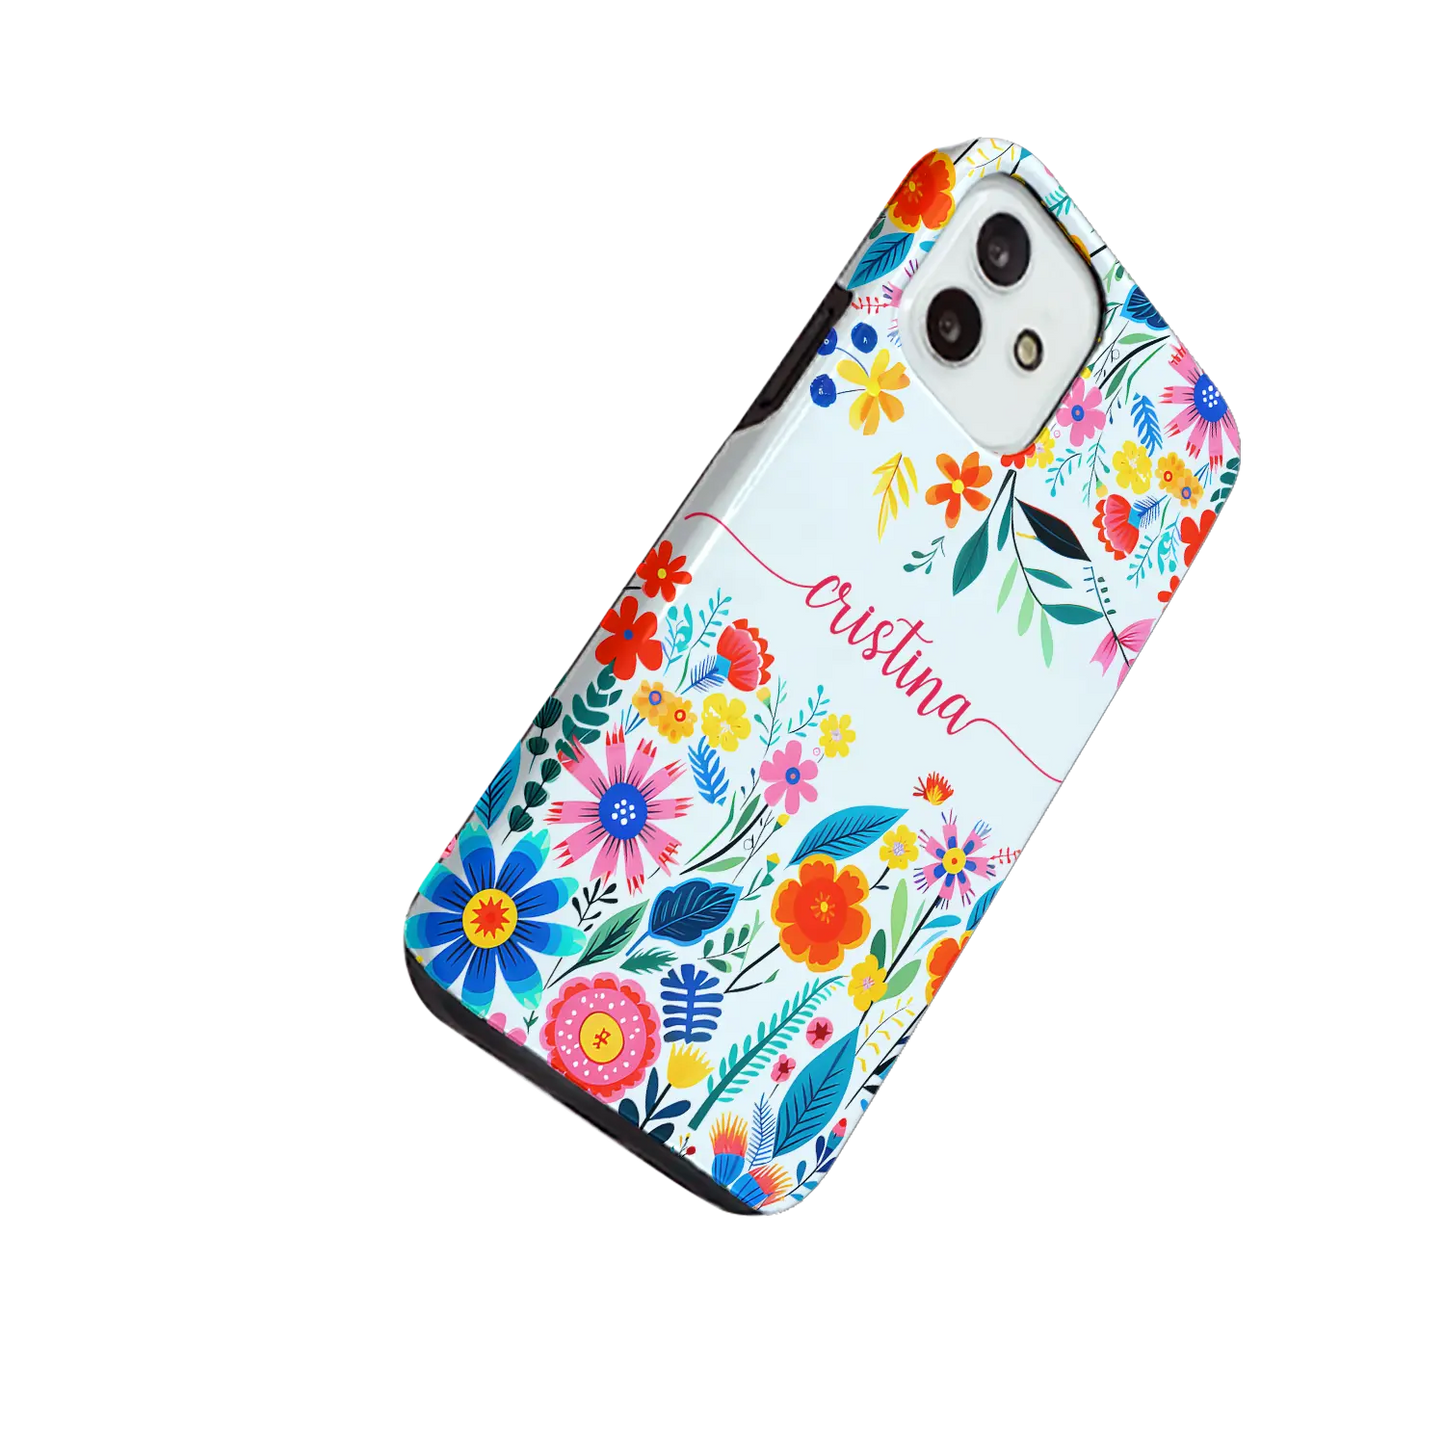 Happy Flowers - Custom Galaxy S case